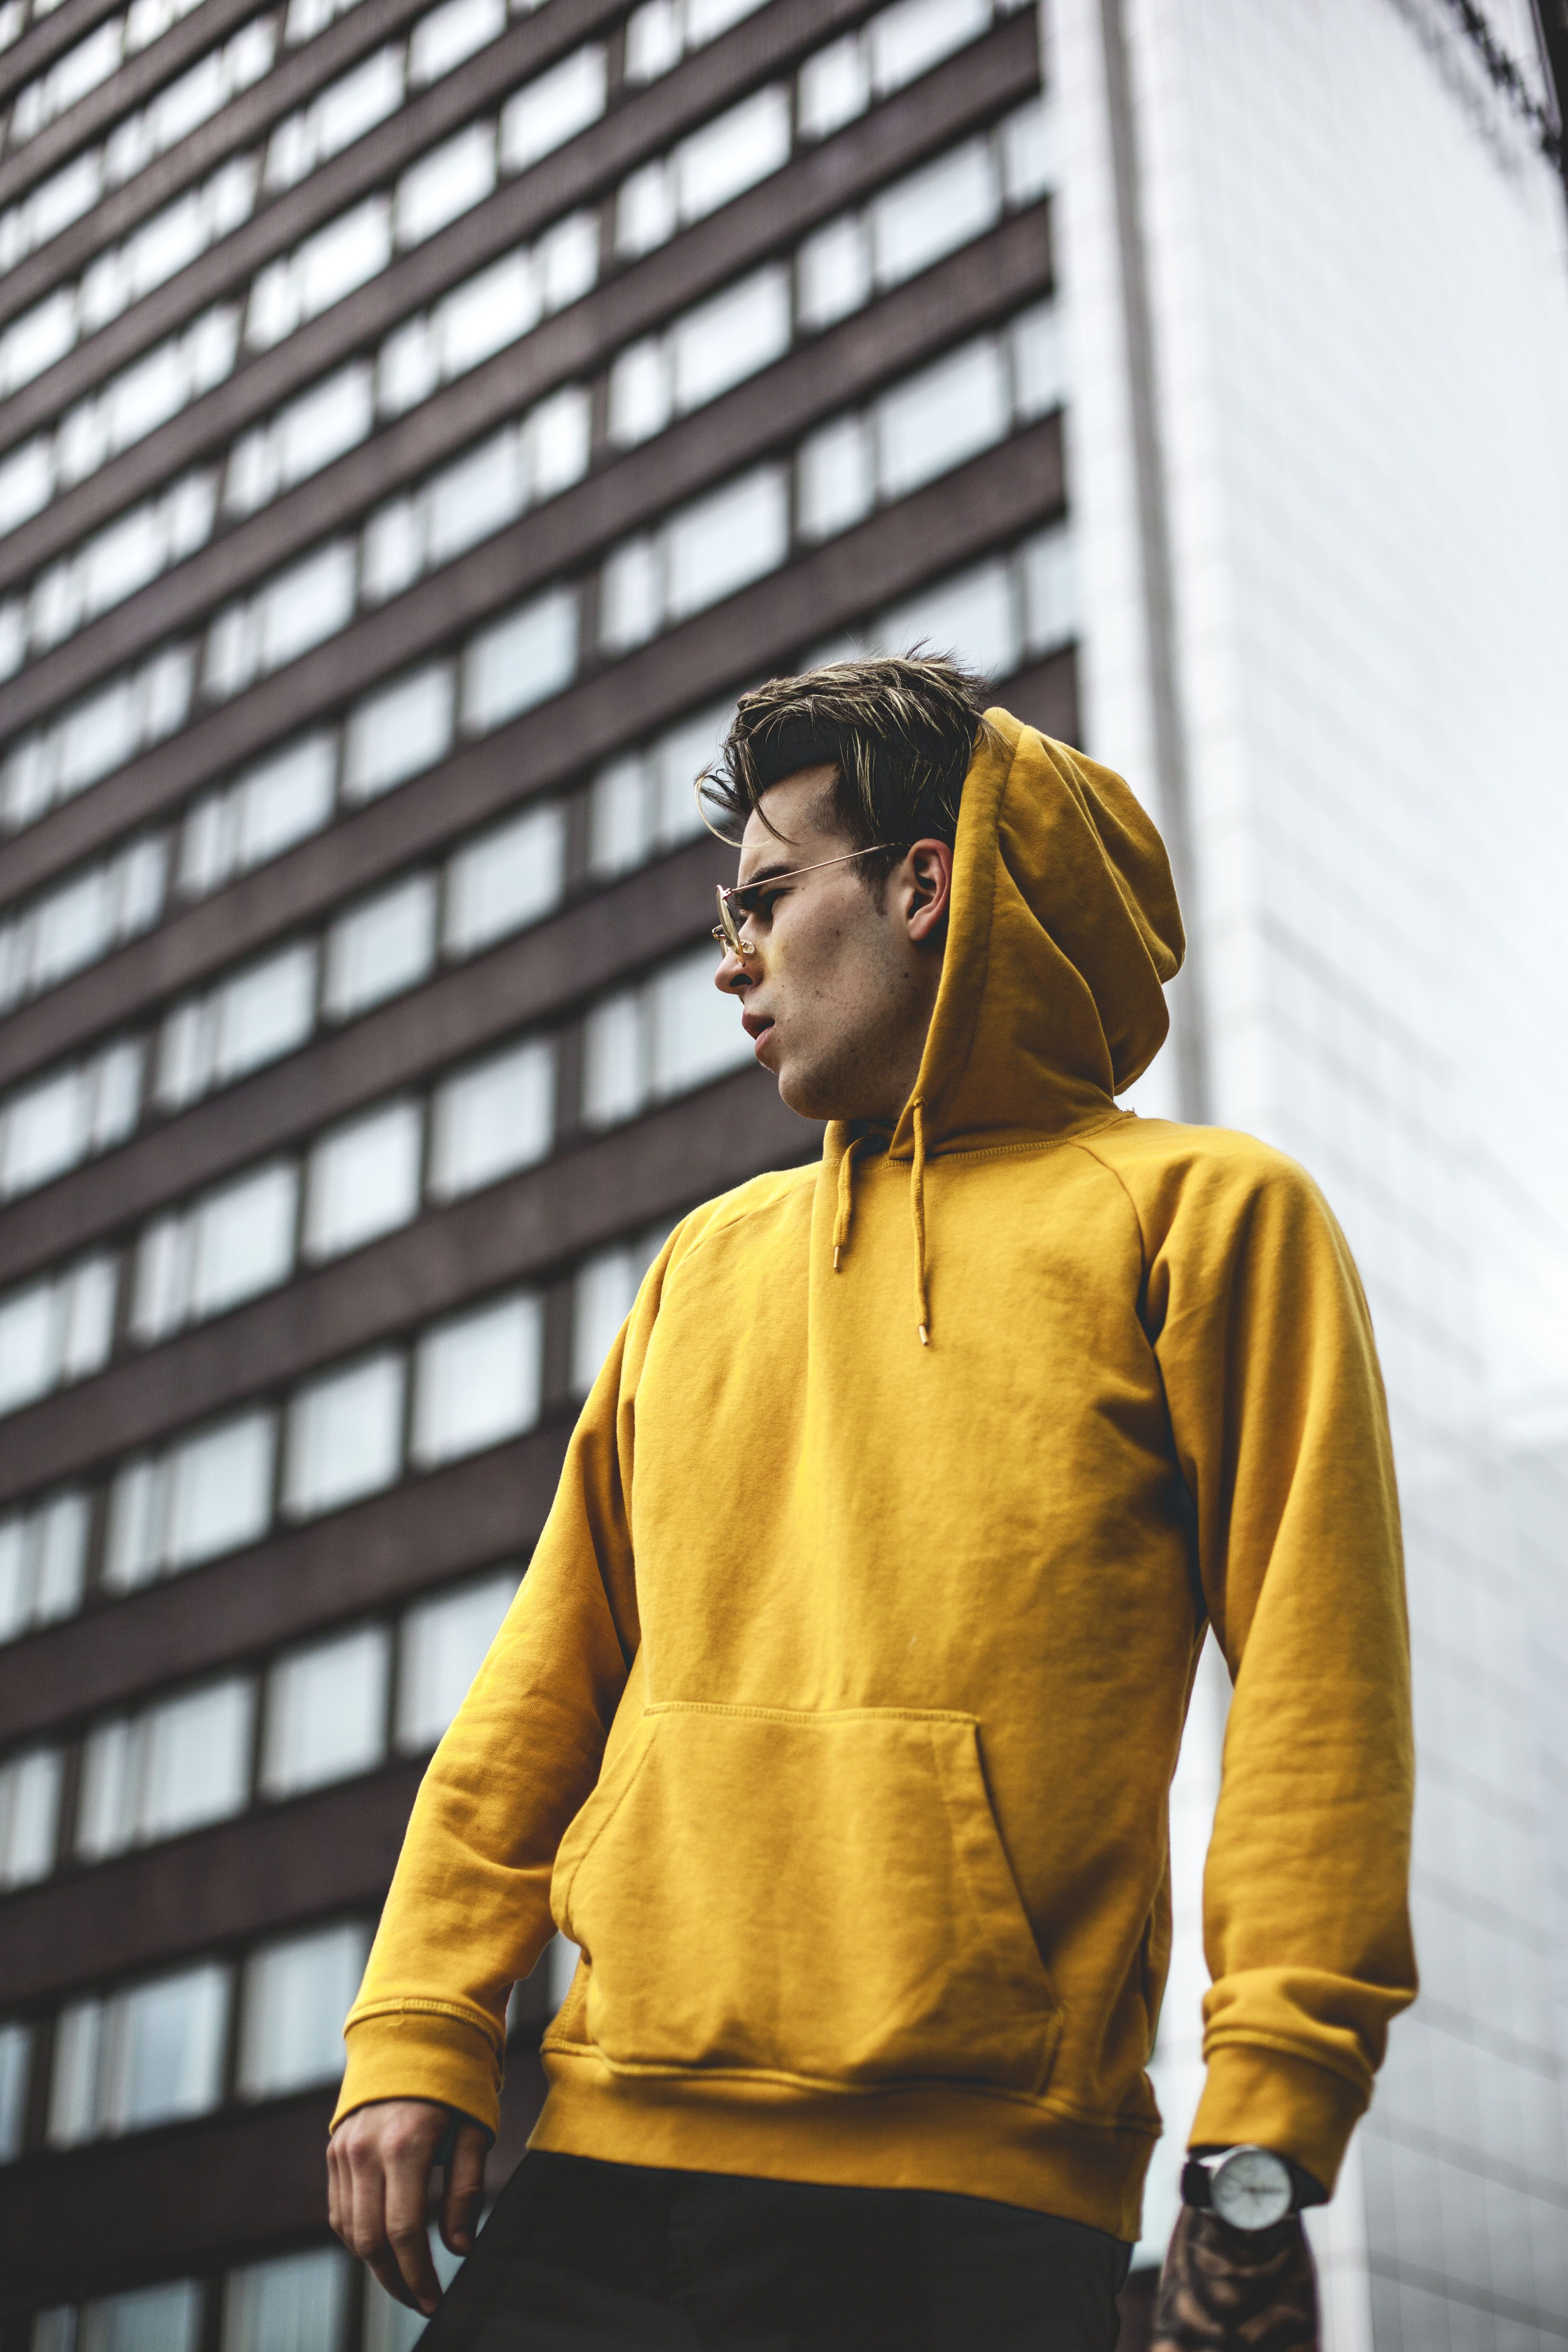 Photography of Guy Wearing Yellow Hoodie · Free